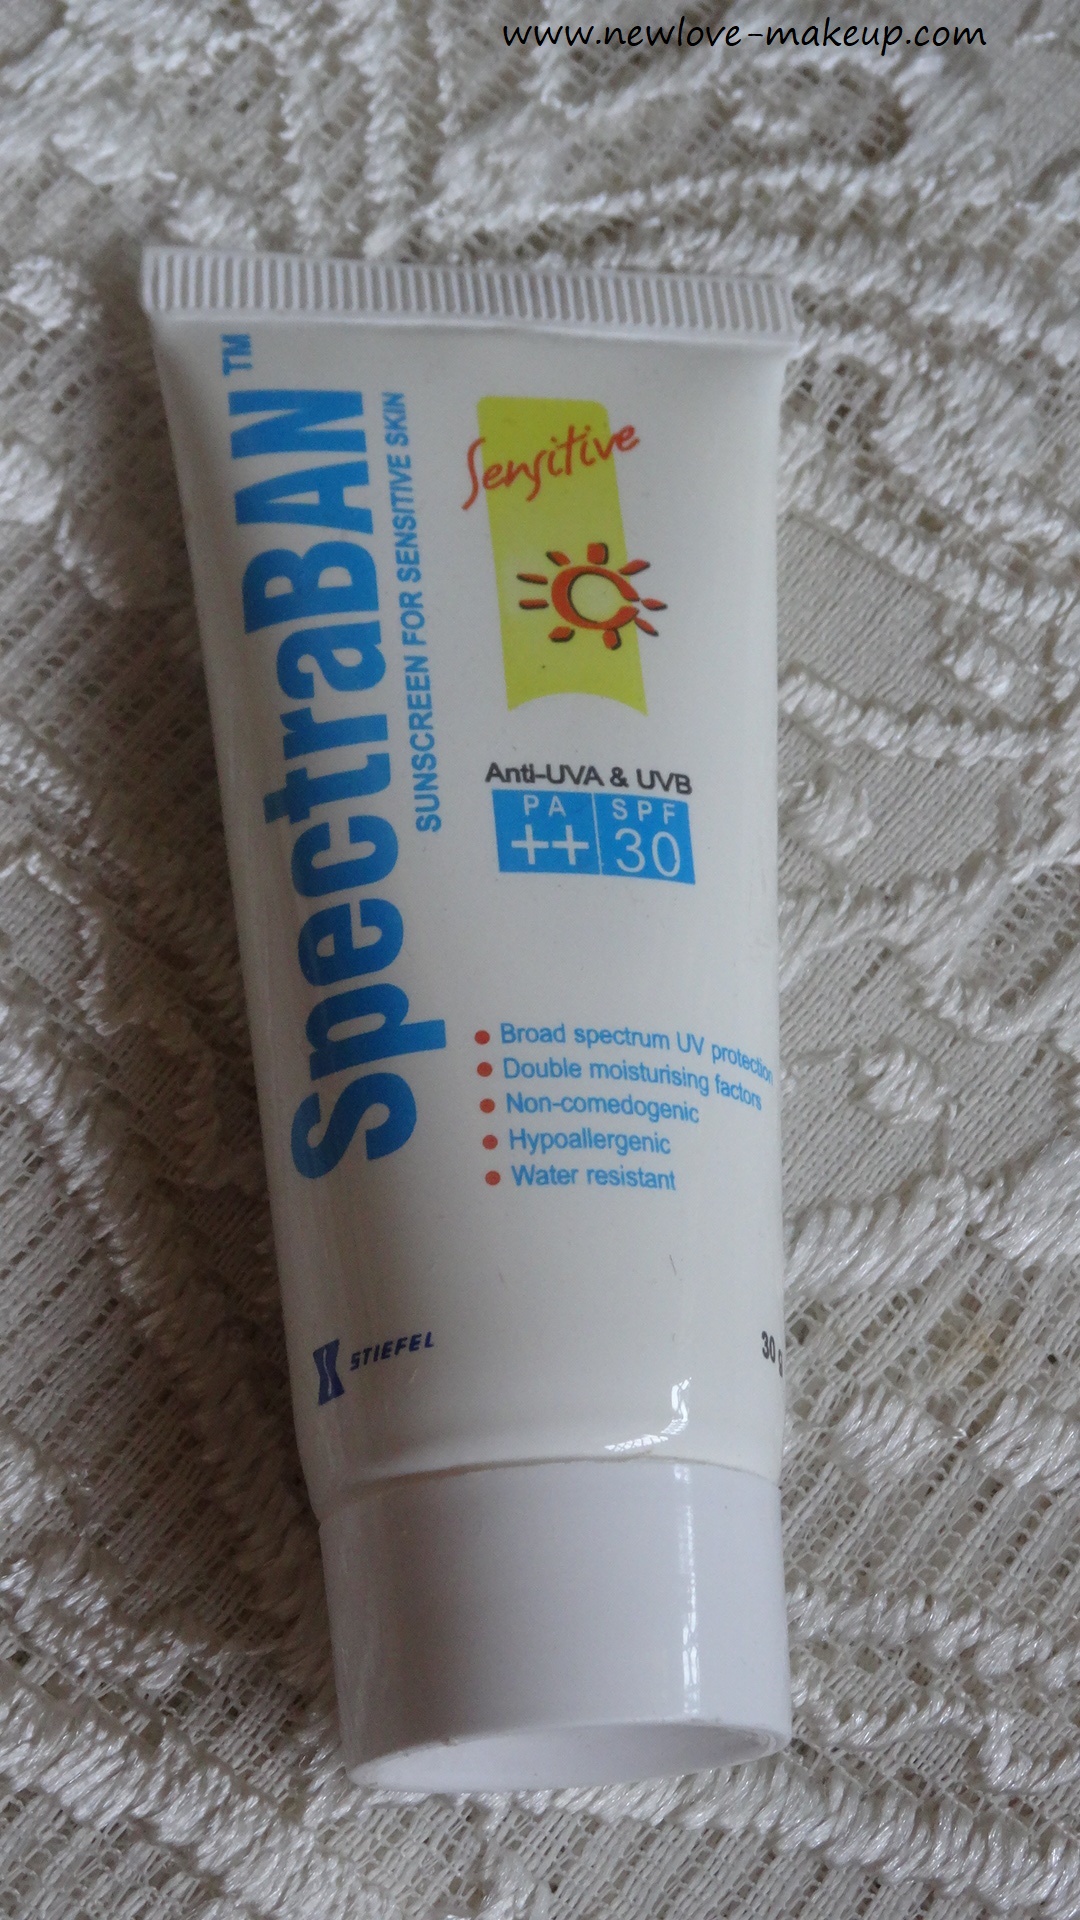 Wees tevreden tieners basketbal SpectraBan Sunscreen [STIEFEL] for Sensitive Skin SPF 30 Review